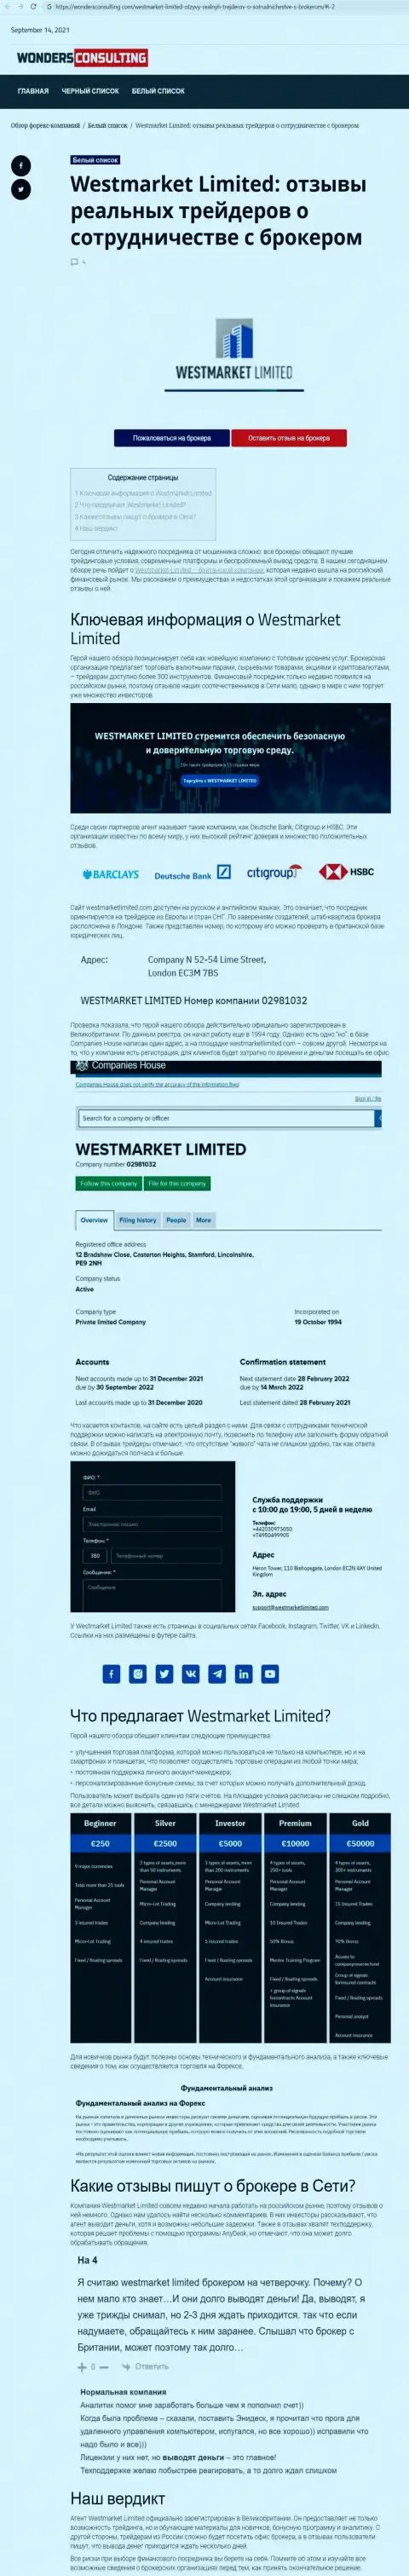 Информация о форекс дилинговом центре West Market Limited на ресурсе ВондерКонсалтинг Ком